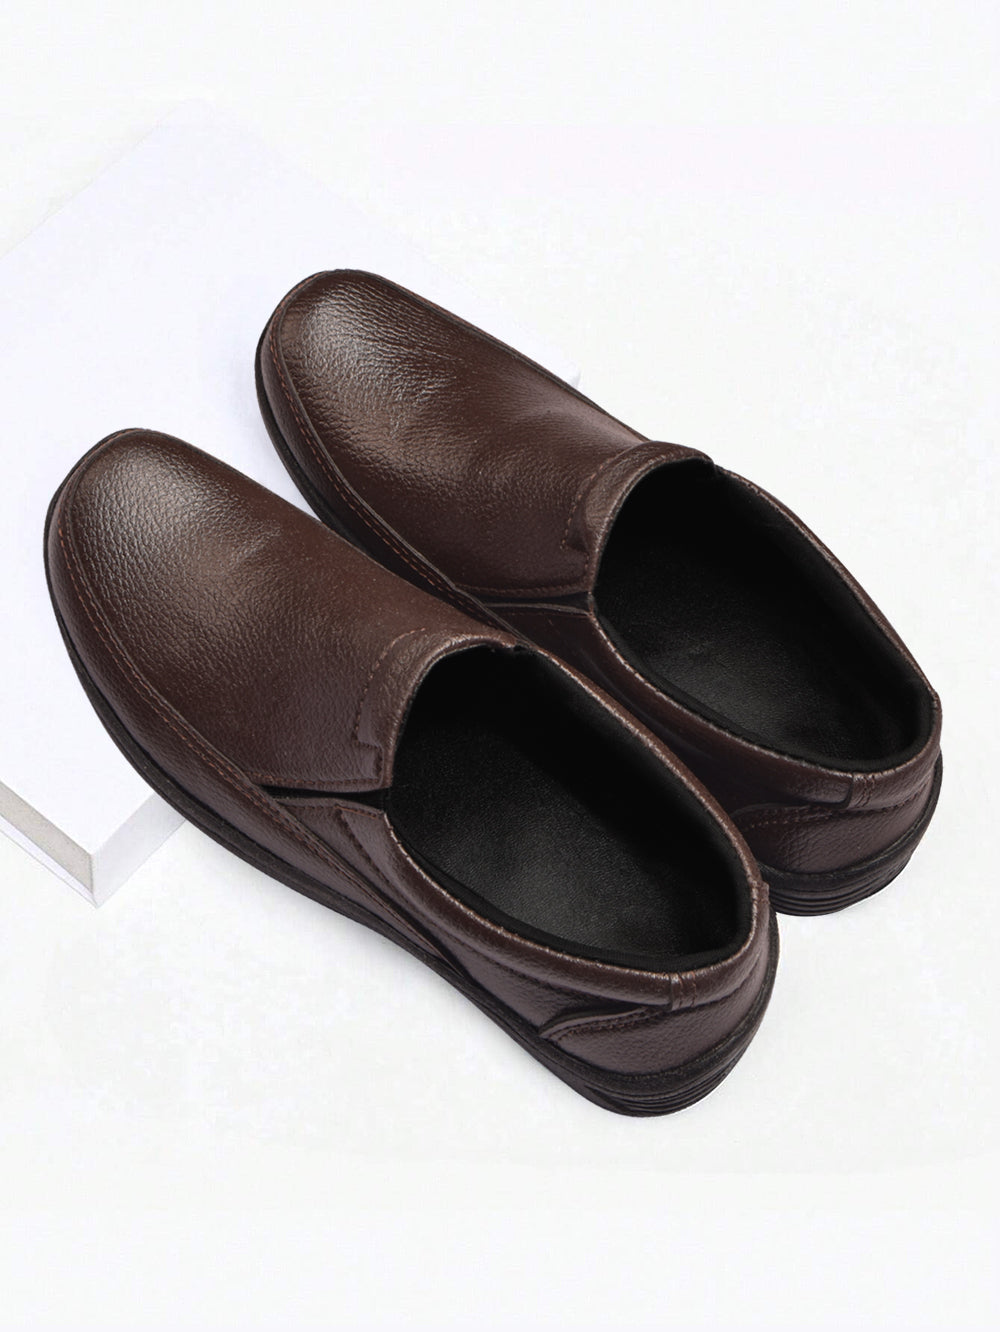 Men's Digger Shoes-Brown-BE1162/BR13411